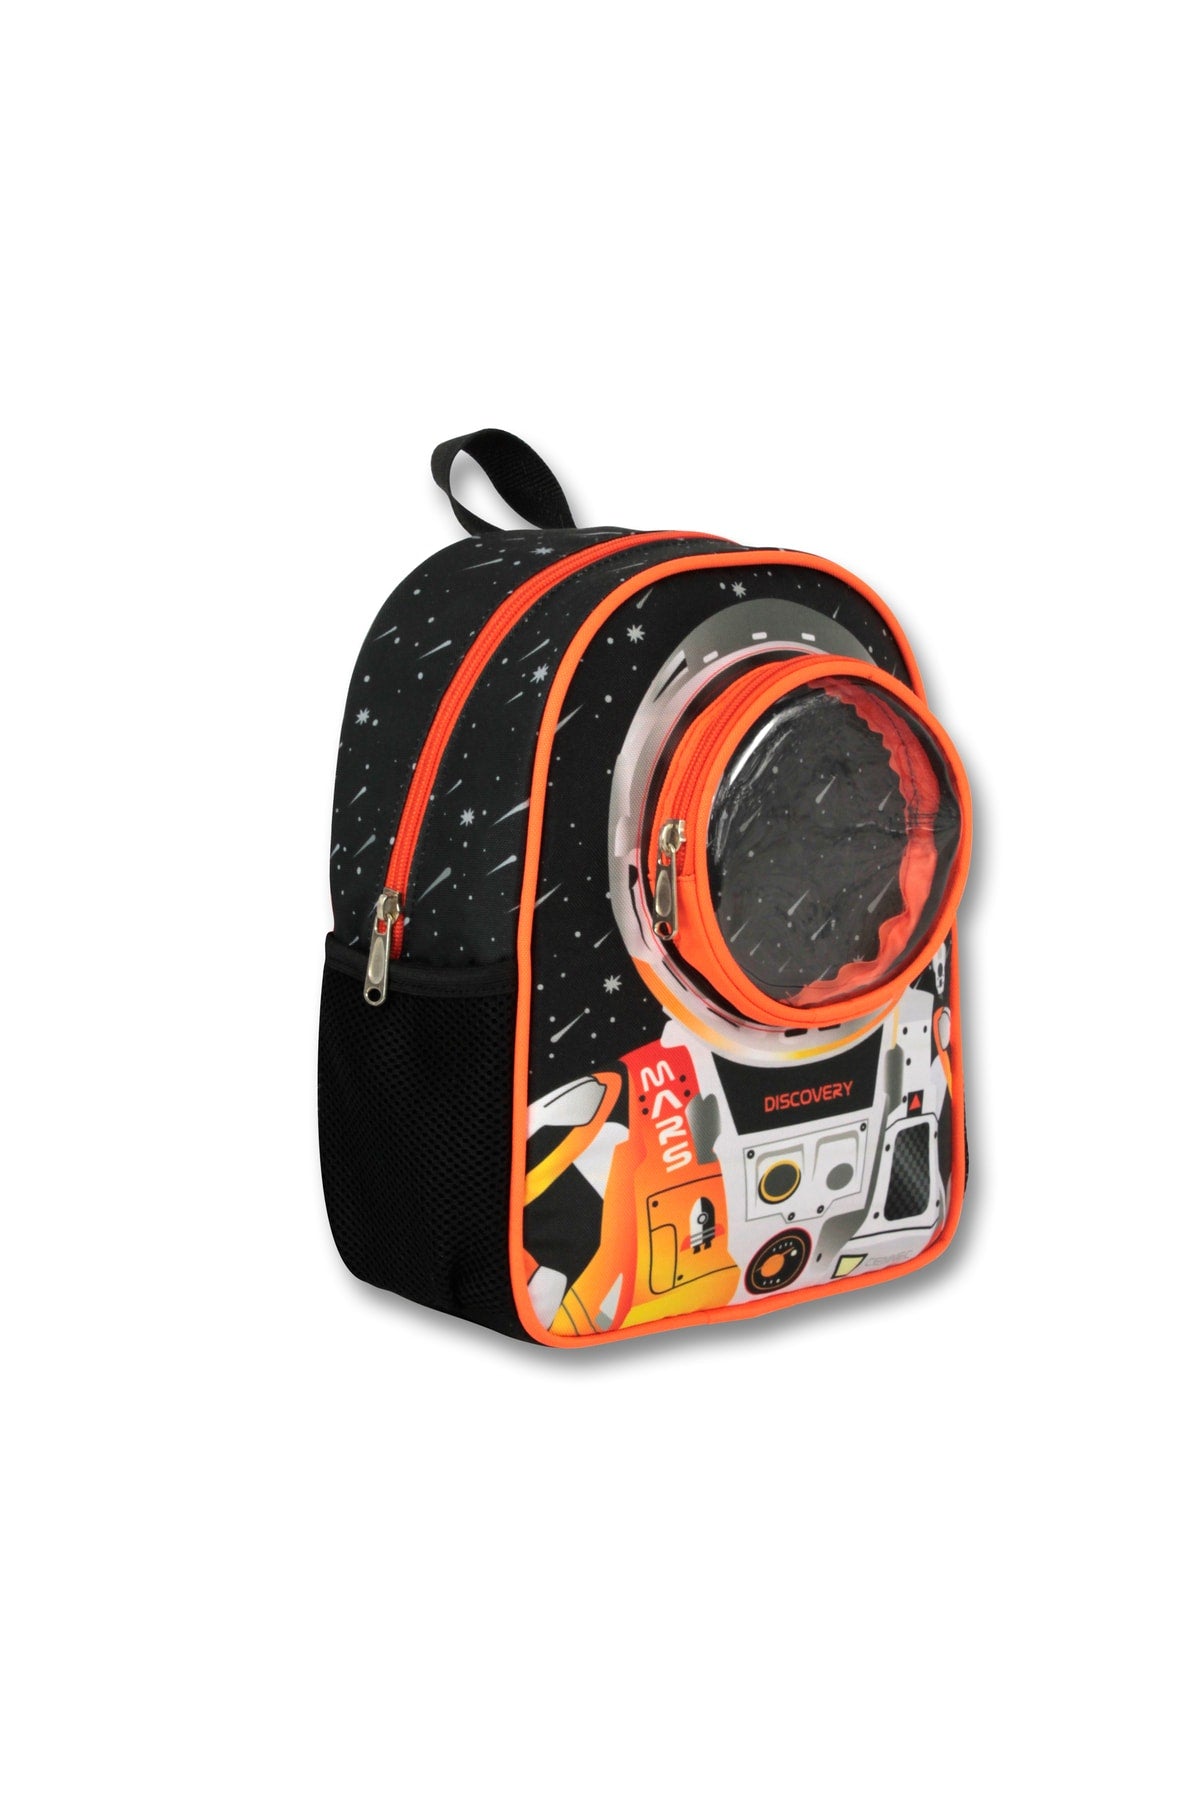 -Umit Bag Astronaut Kindergarten Bag Lunch And Pencil Bag Set